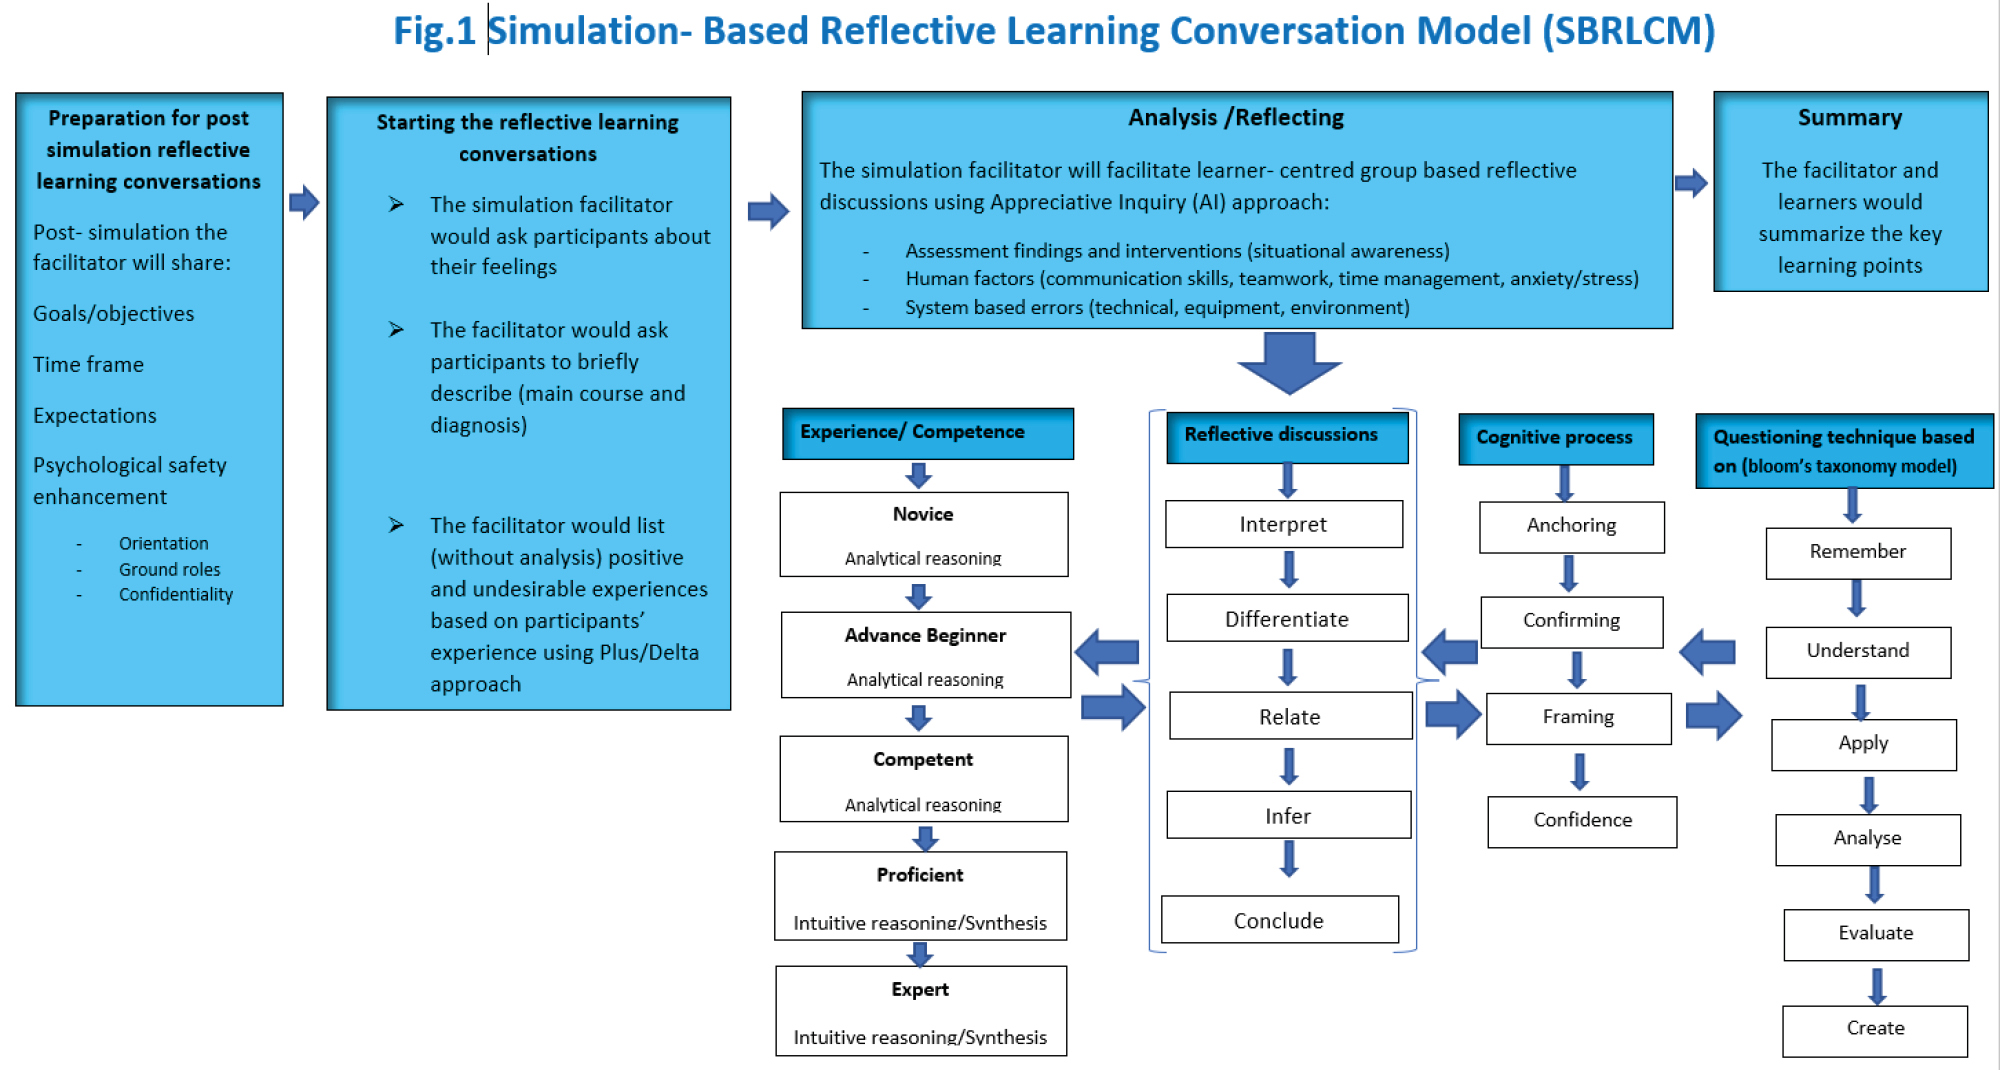 Simulation-Based Reflective Learning Conversation Model (SBRLCM) under development